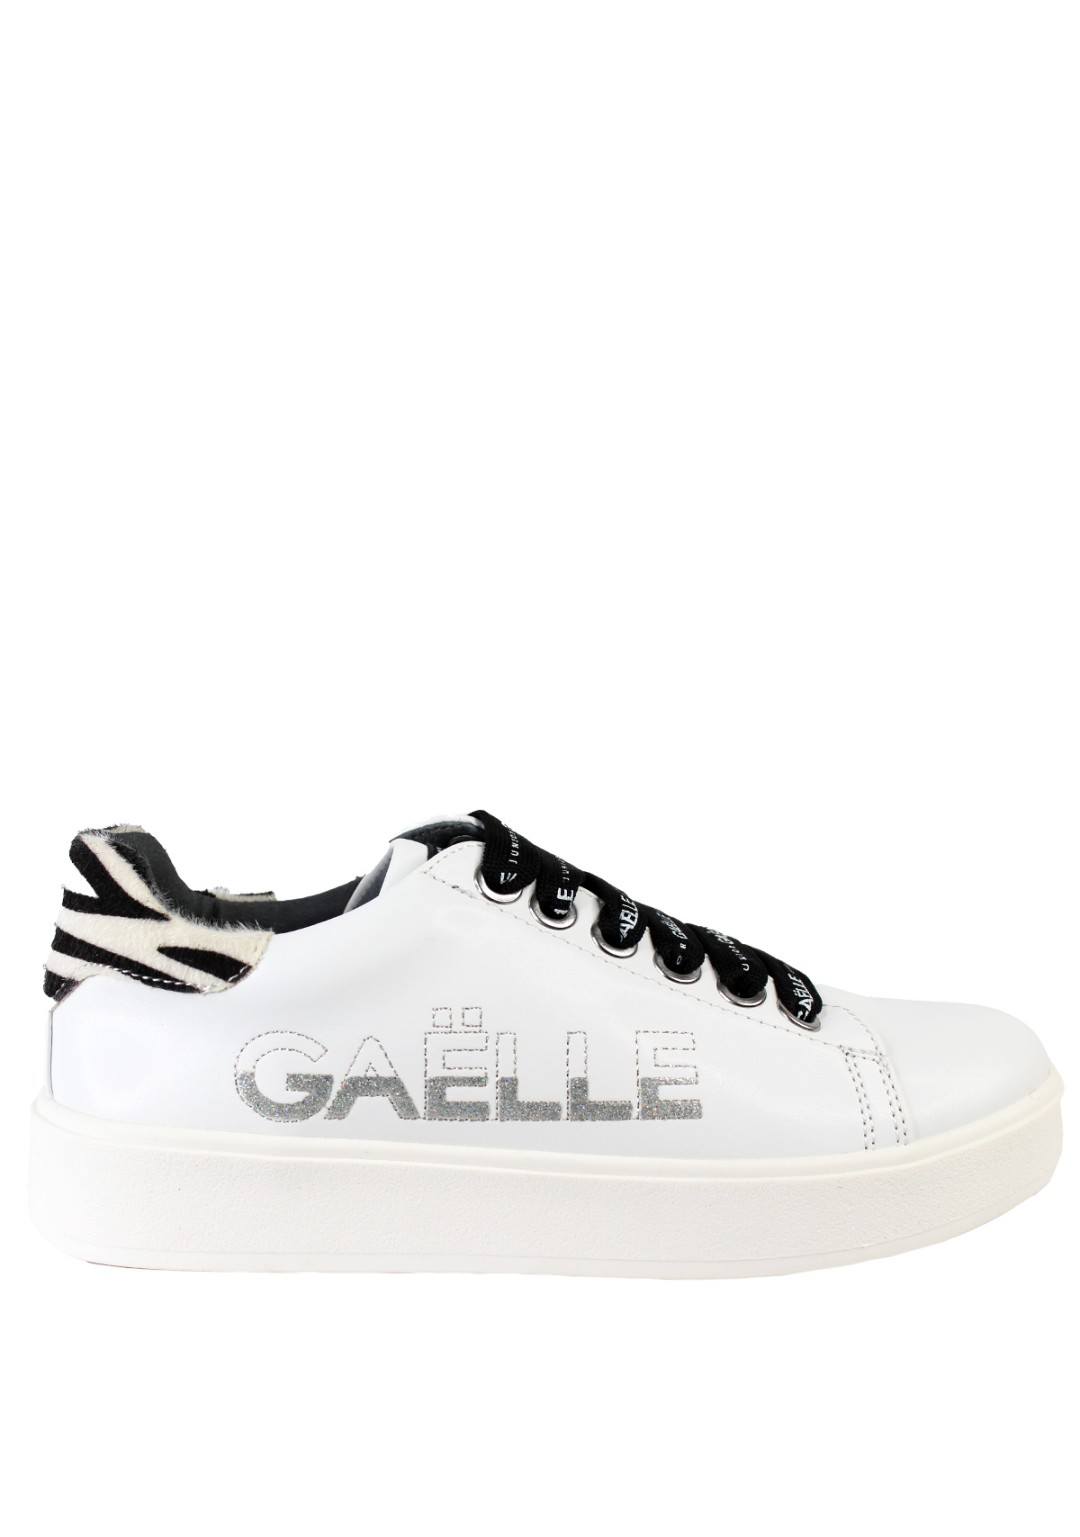 GAëLLE PARIS - Sneaker Rip.Zebrato - Bambine e ragazze - G- 1601B